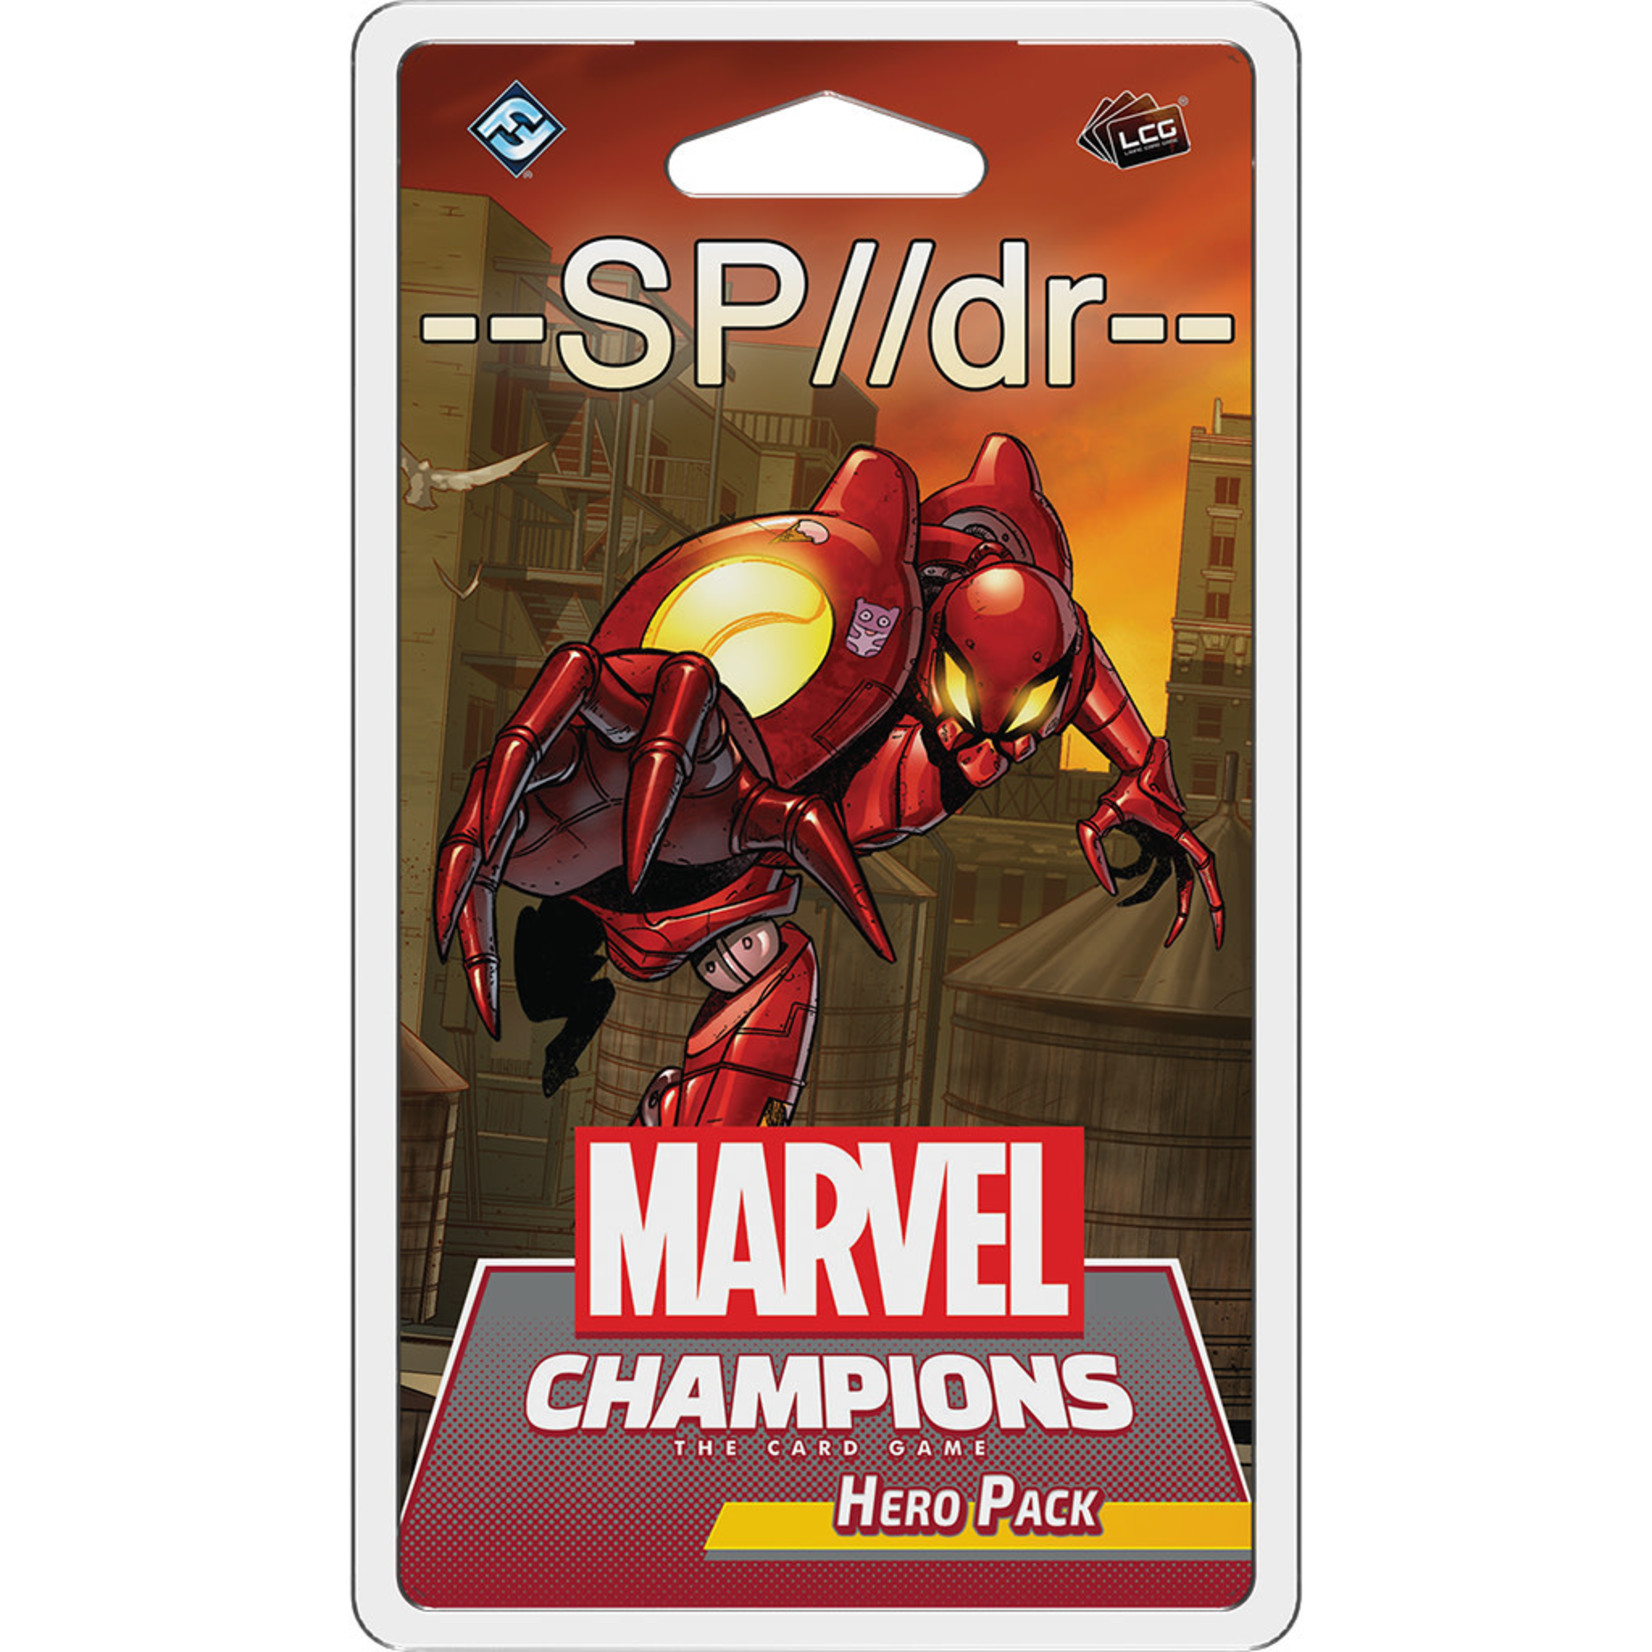 Marvel Champions --SP//dr-- Hero Pack